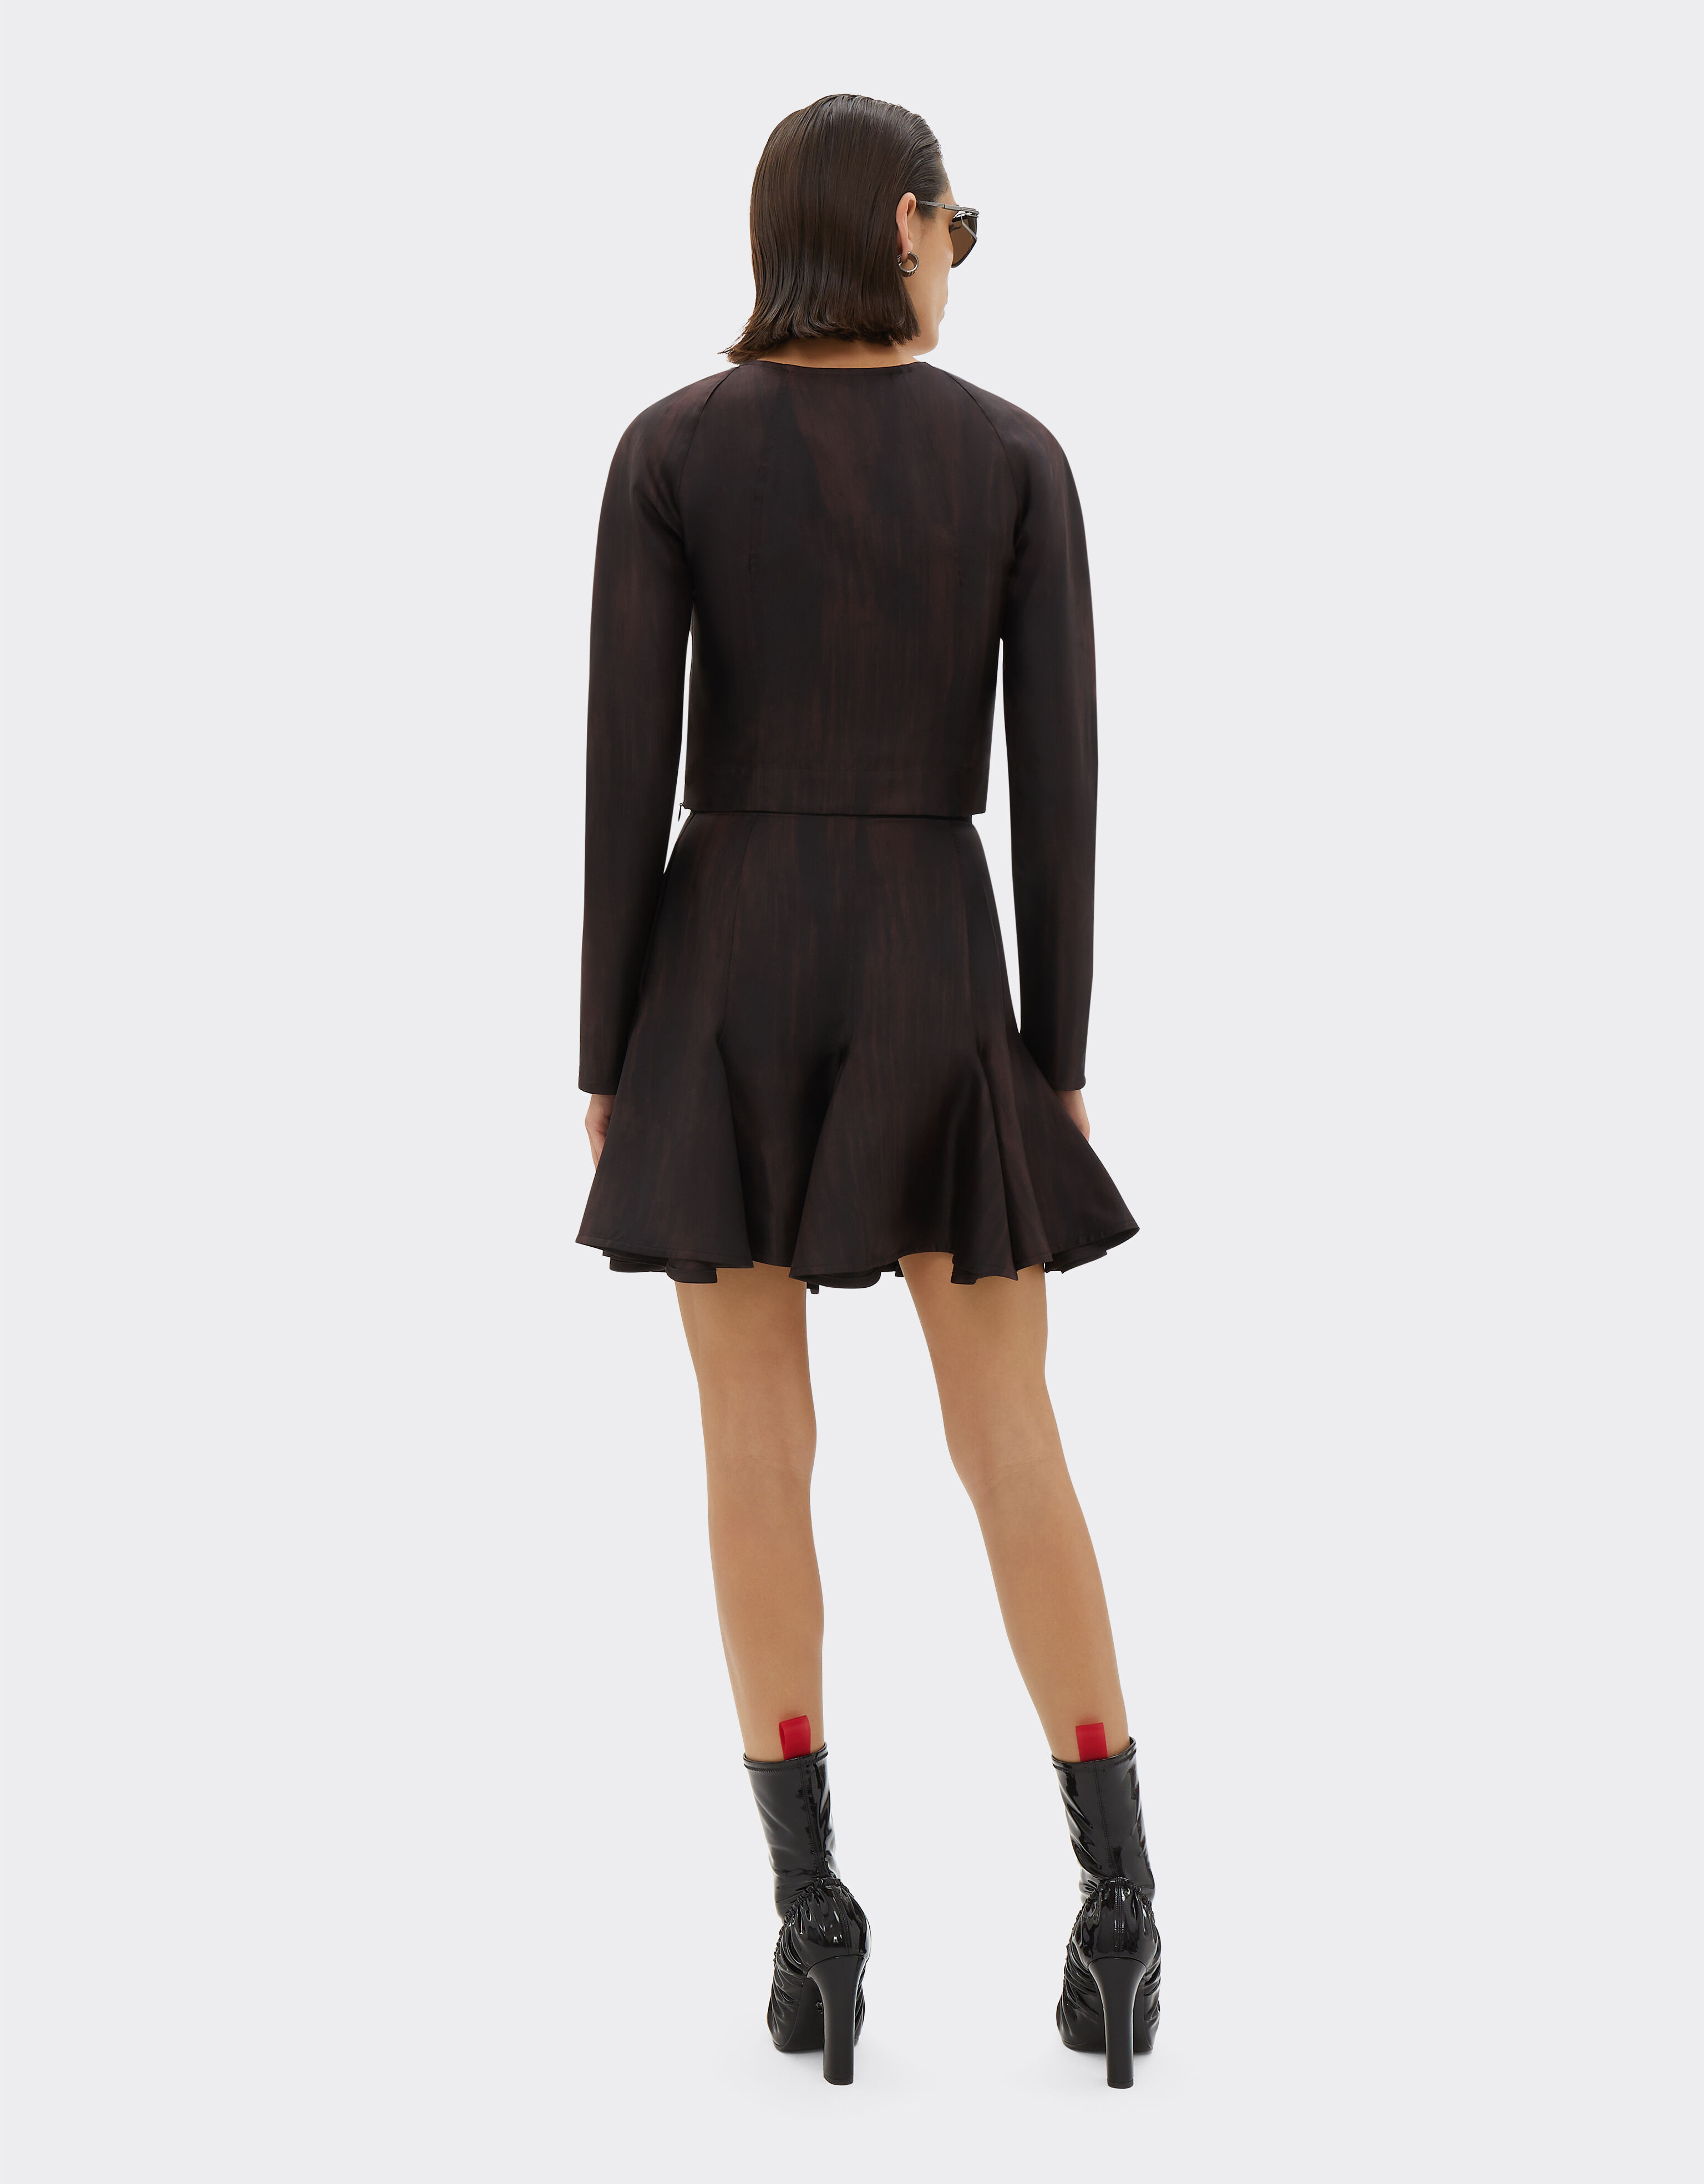 Ferrari Short silk skirt with brushed print Dark Brown 20937f